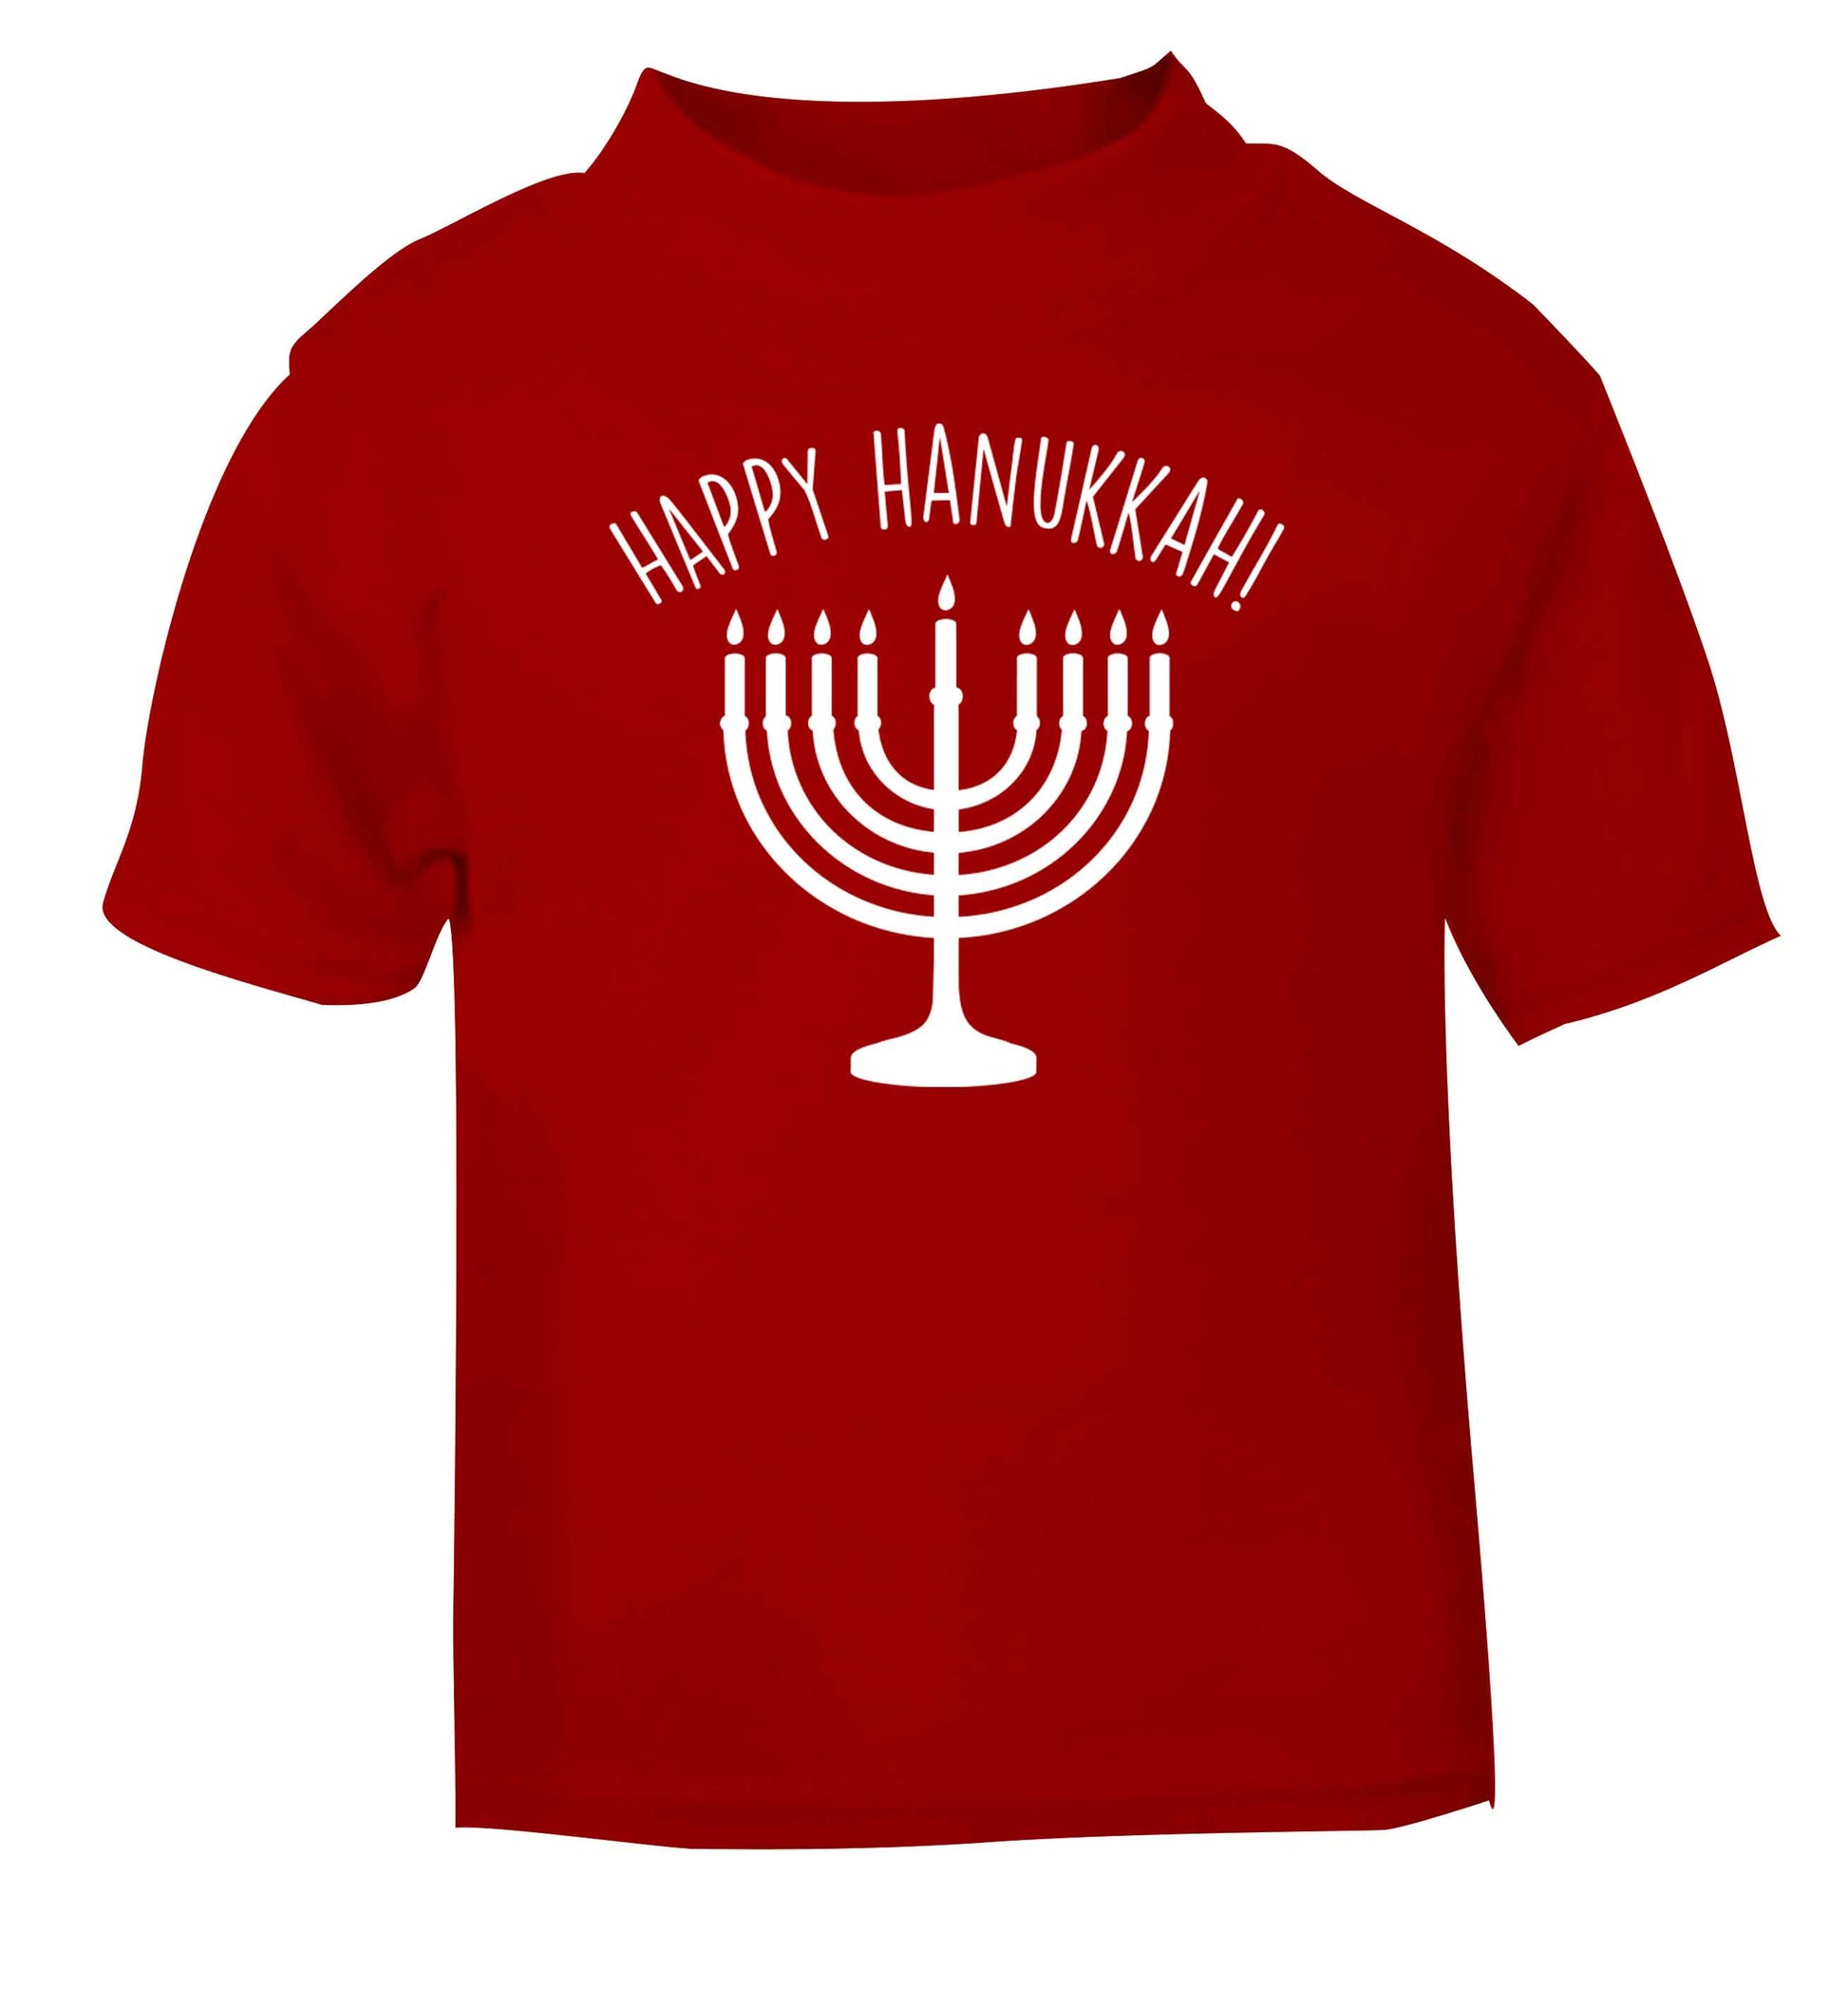 Happy hanukkah red baby toddler Tshirt 2 Years